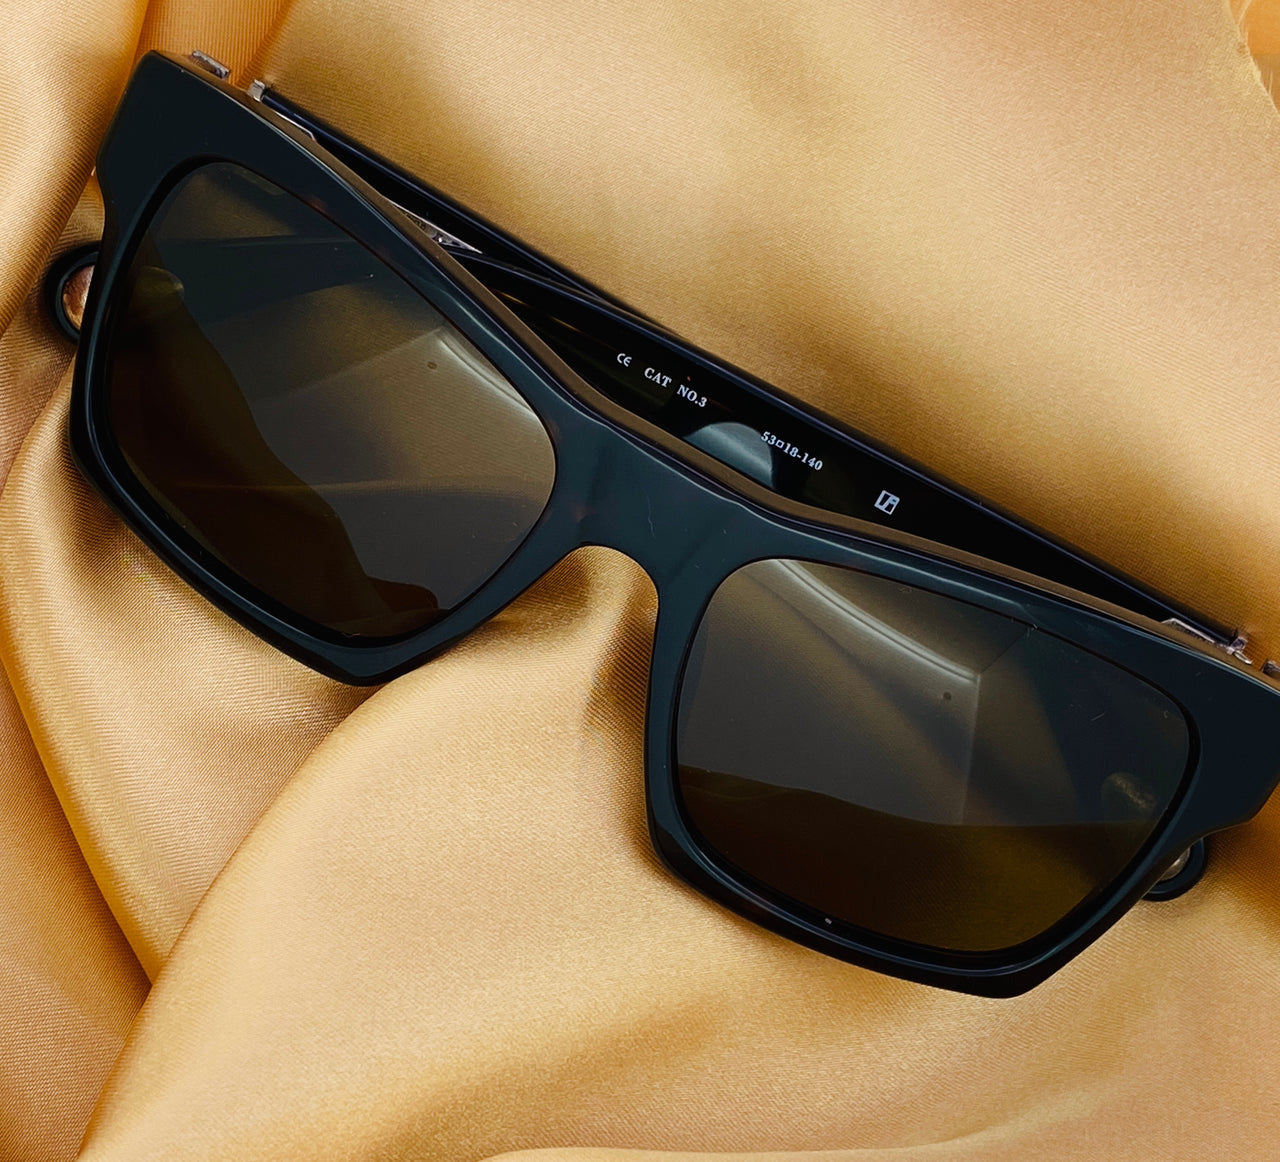 Ann Demeulemeester Sunglasses D-Frame Tortoise Shell and Brown